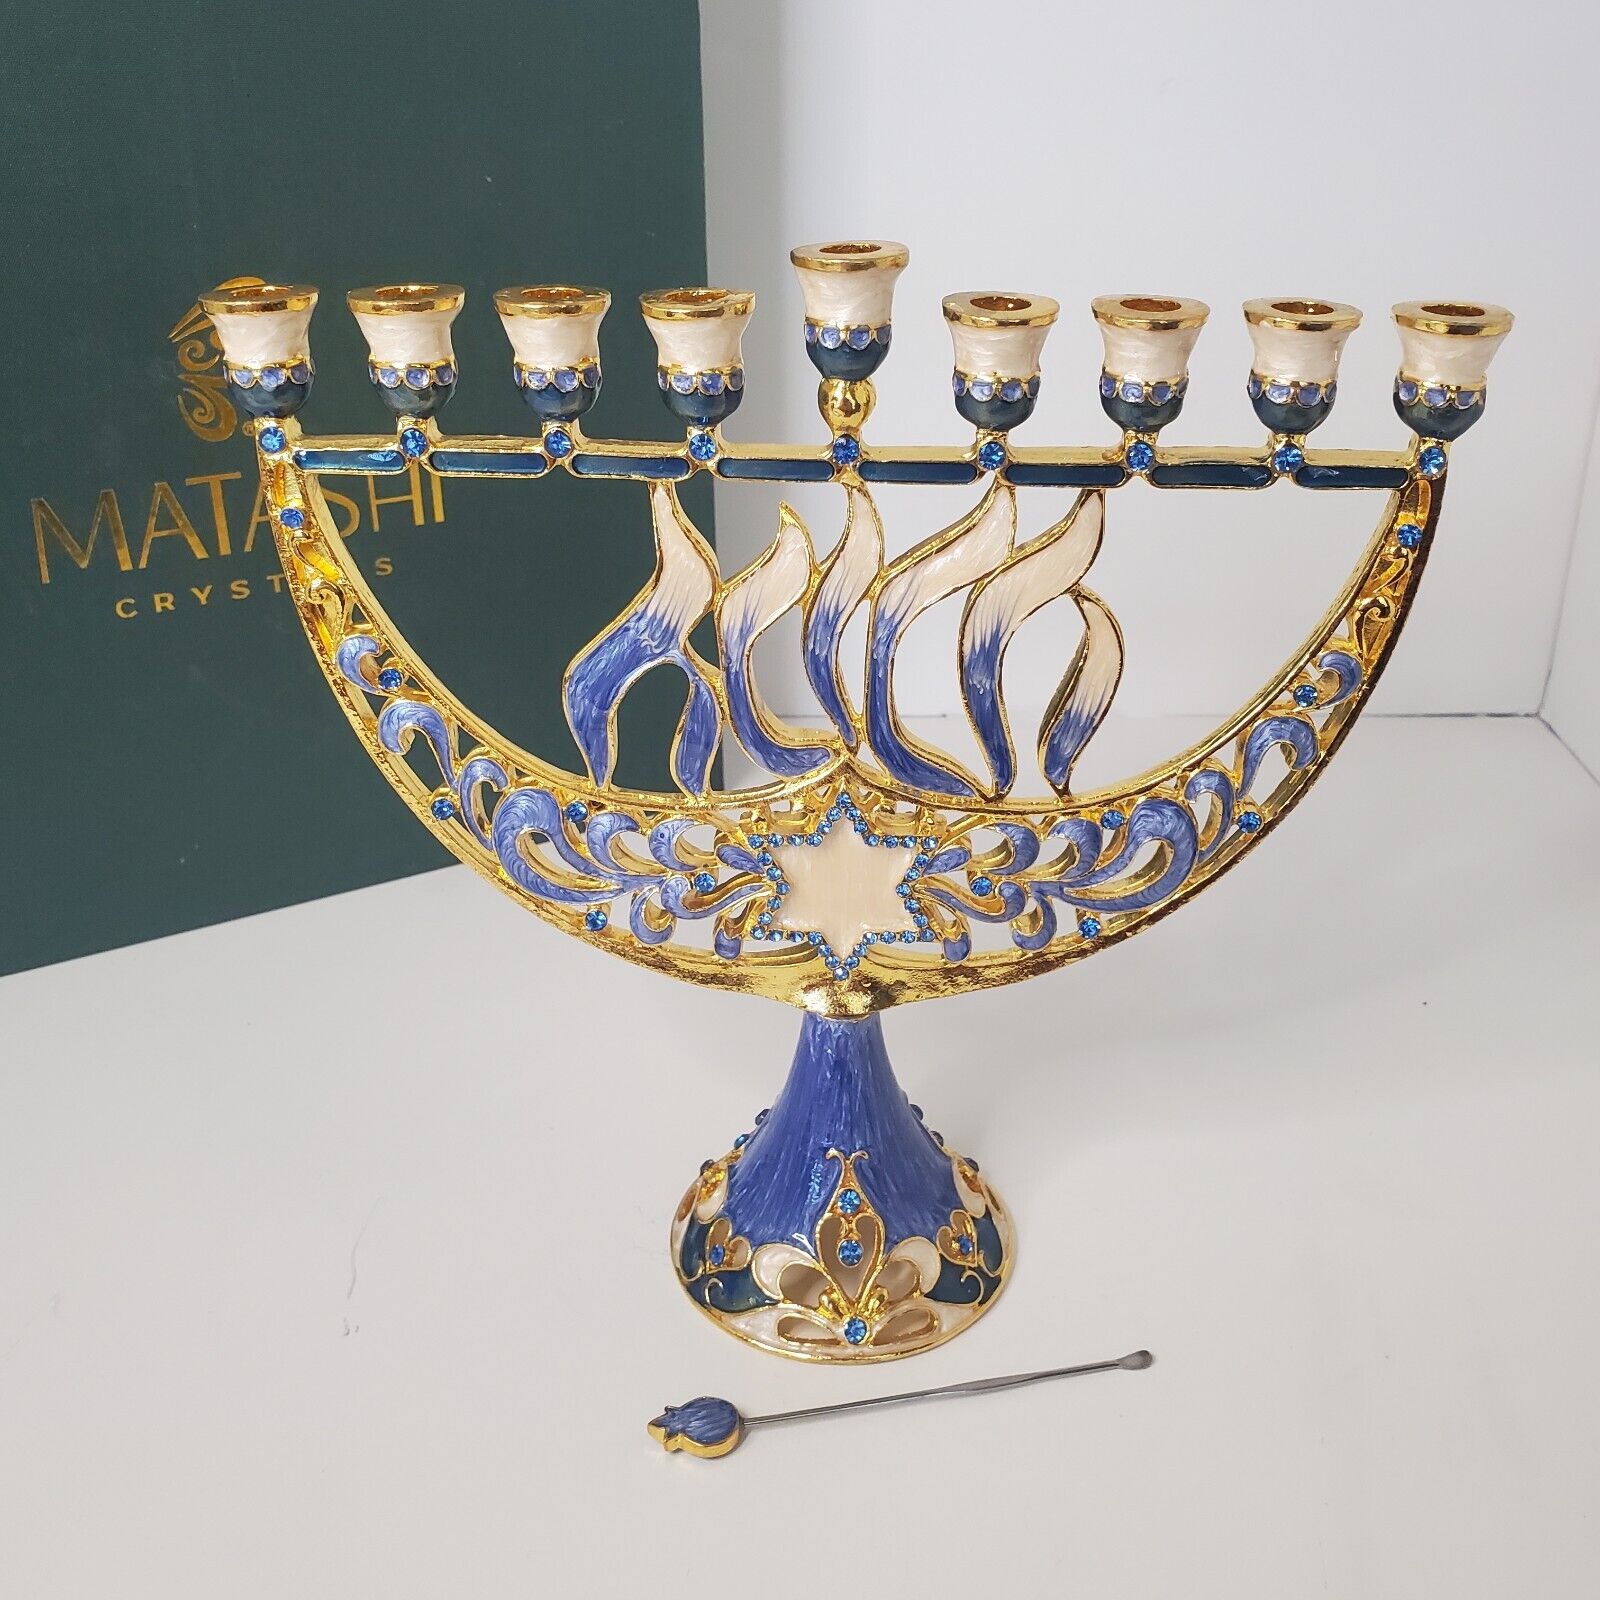 Matashi Hand Painted Enamel Hanukkah Menorah  with Star of David